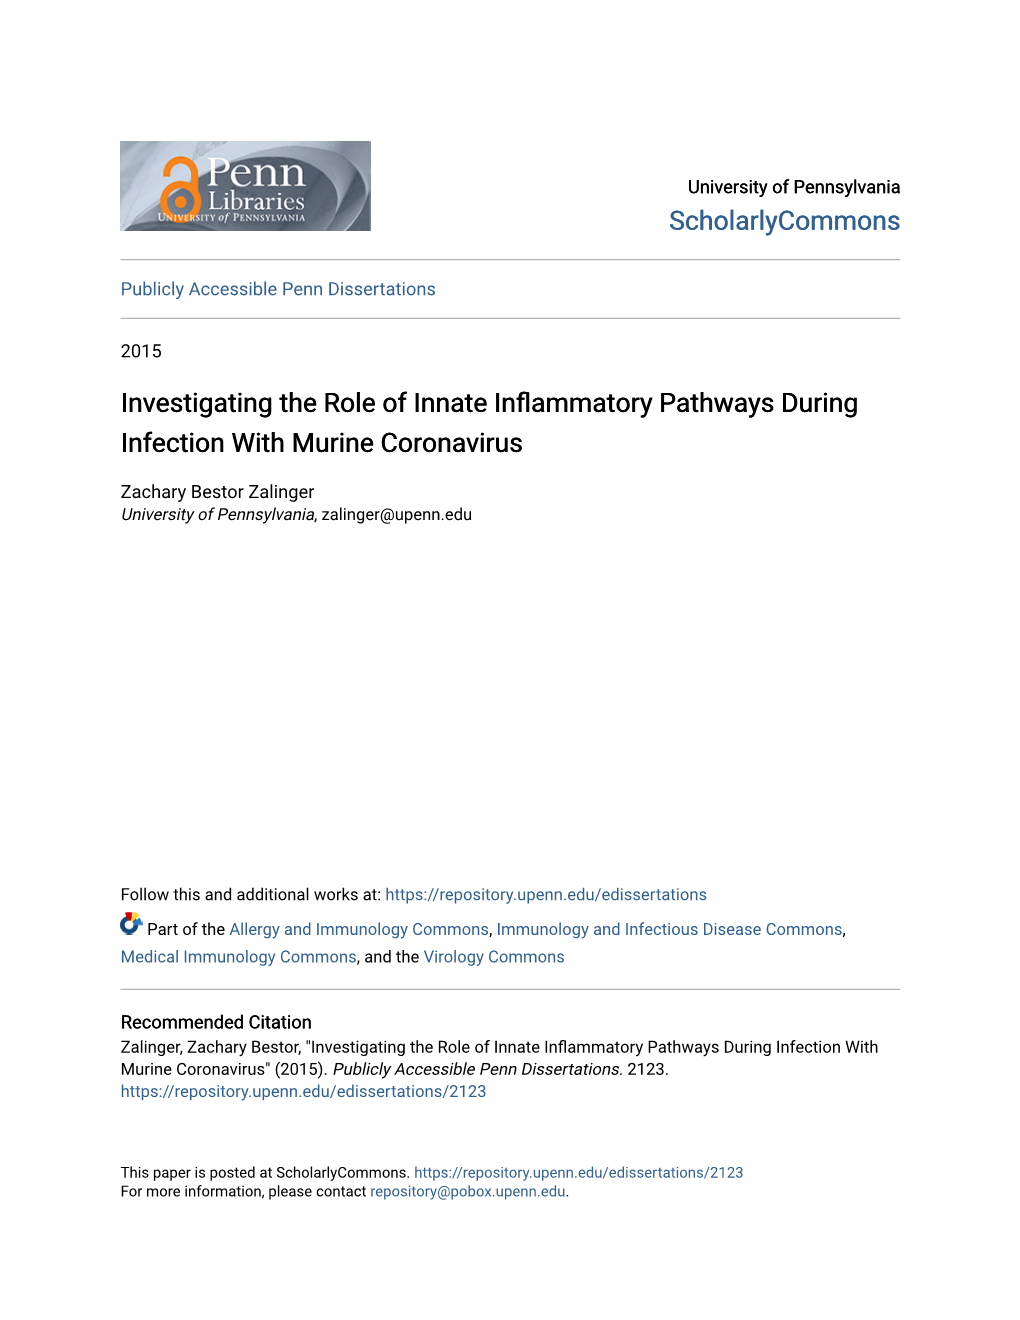 Investigating the Role of Innate Inflammatory Pathways During Infection with Murine Coronavirus